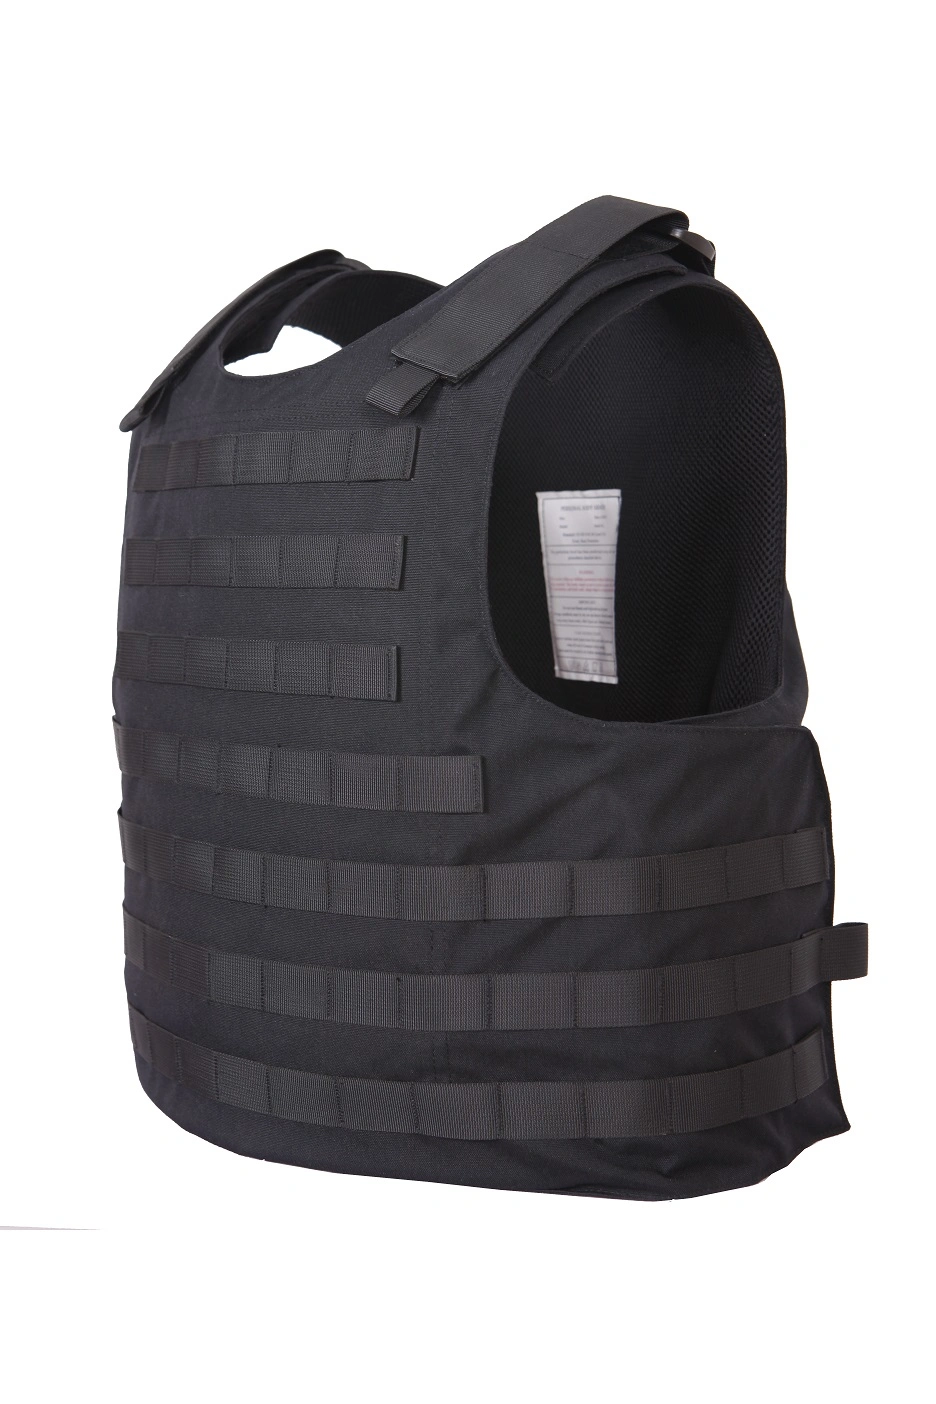 Tactical Nij 0101.06 Vpam Certified Stab and Bullet Proof Vest Jacket